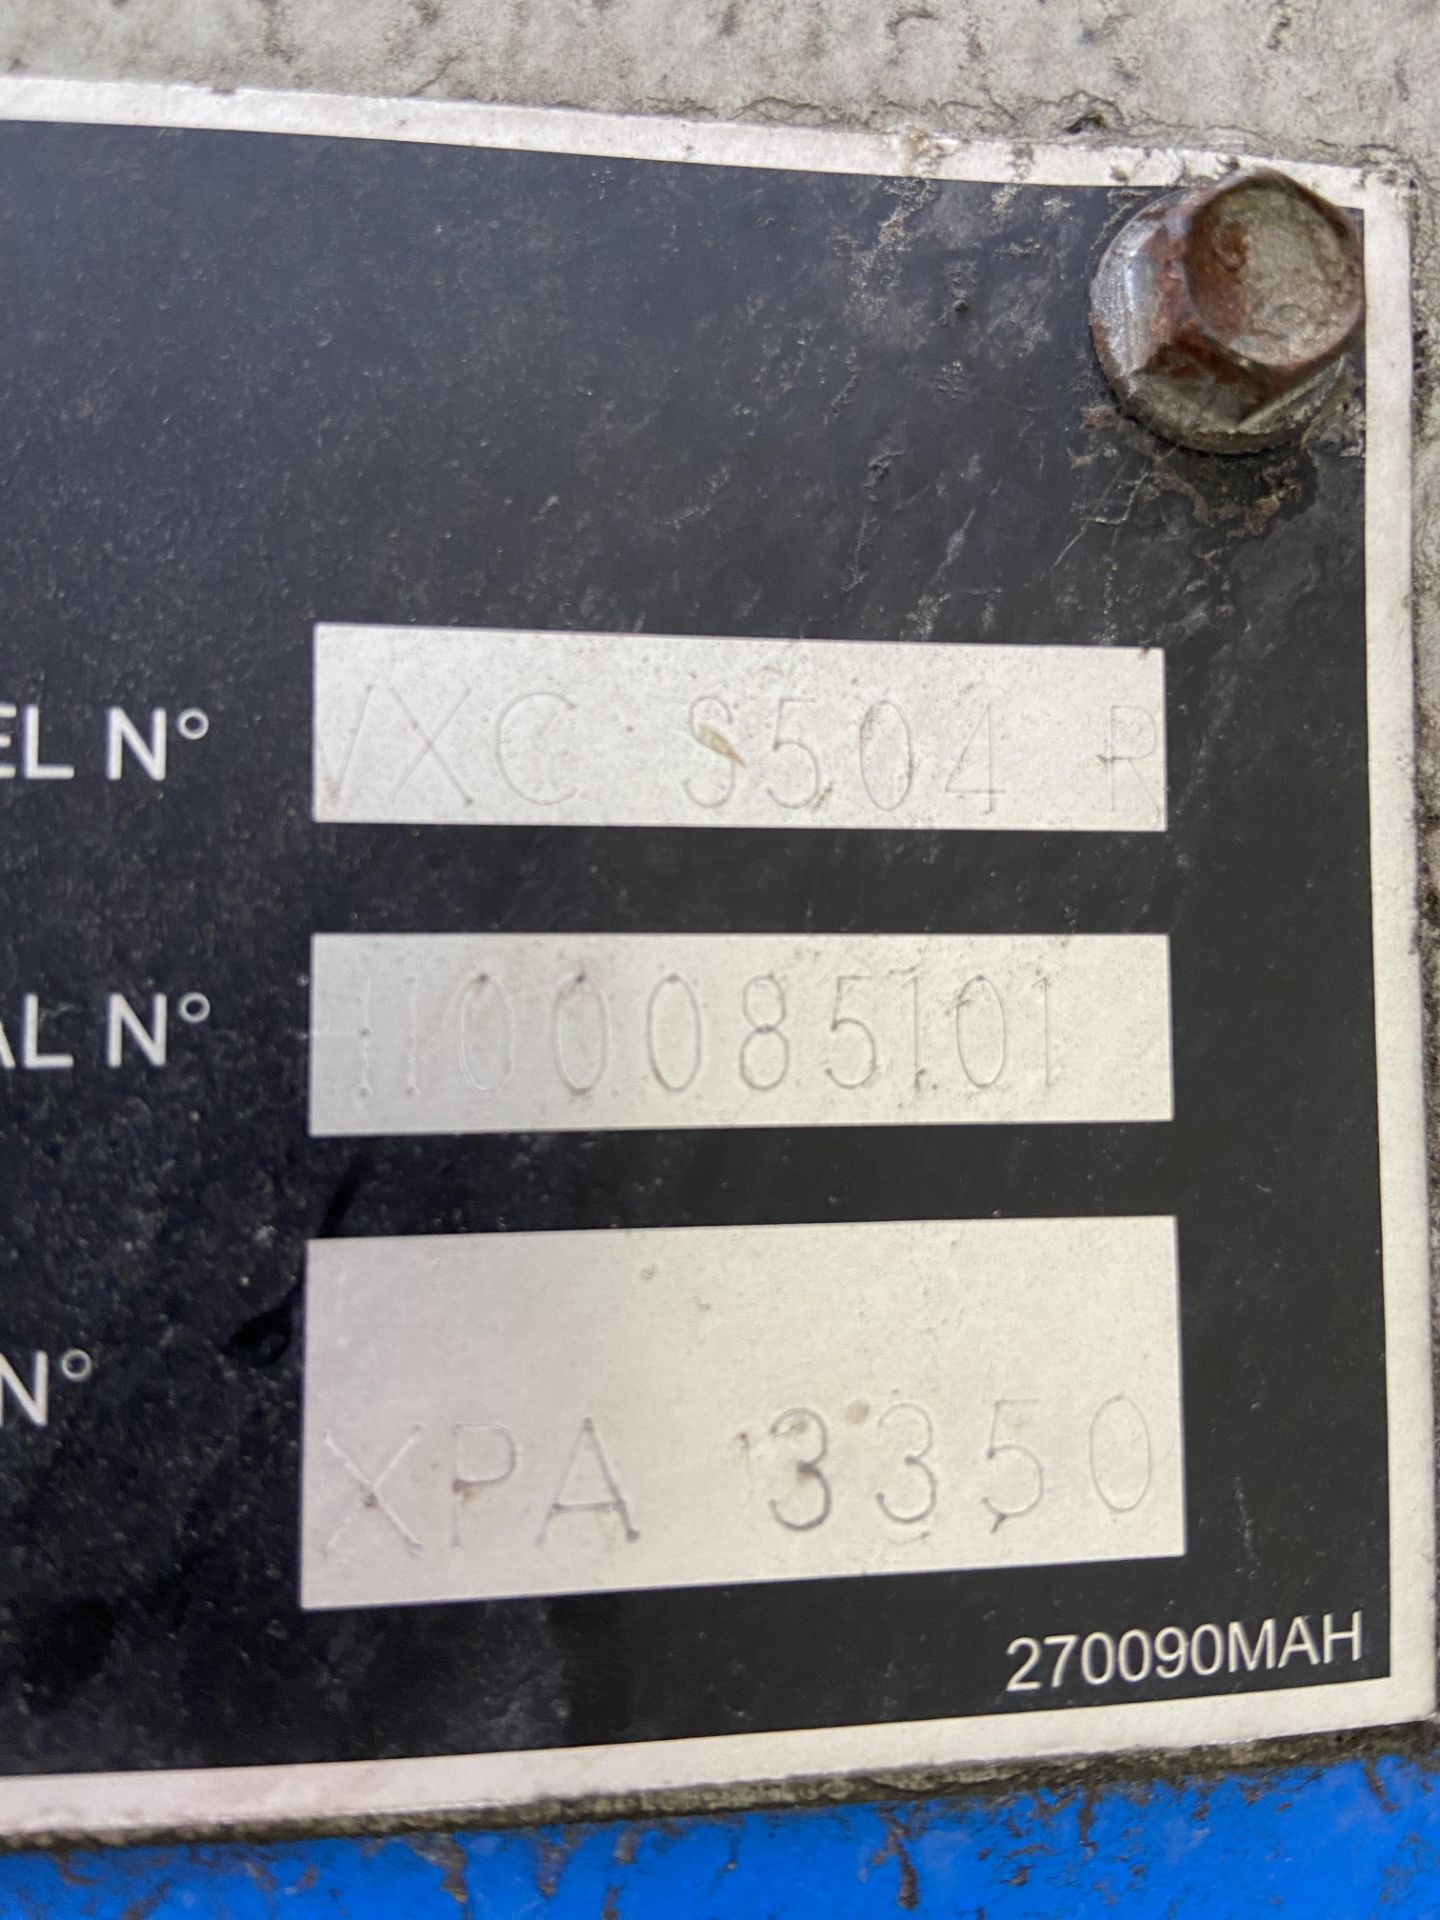 PAC VXC S504 Evaporative Condenser, serial no. H100085101, belt no. XPA 3350, approx. 5.5m x 2.4m - Image 5 of 6